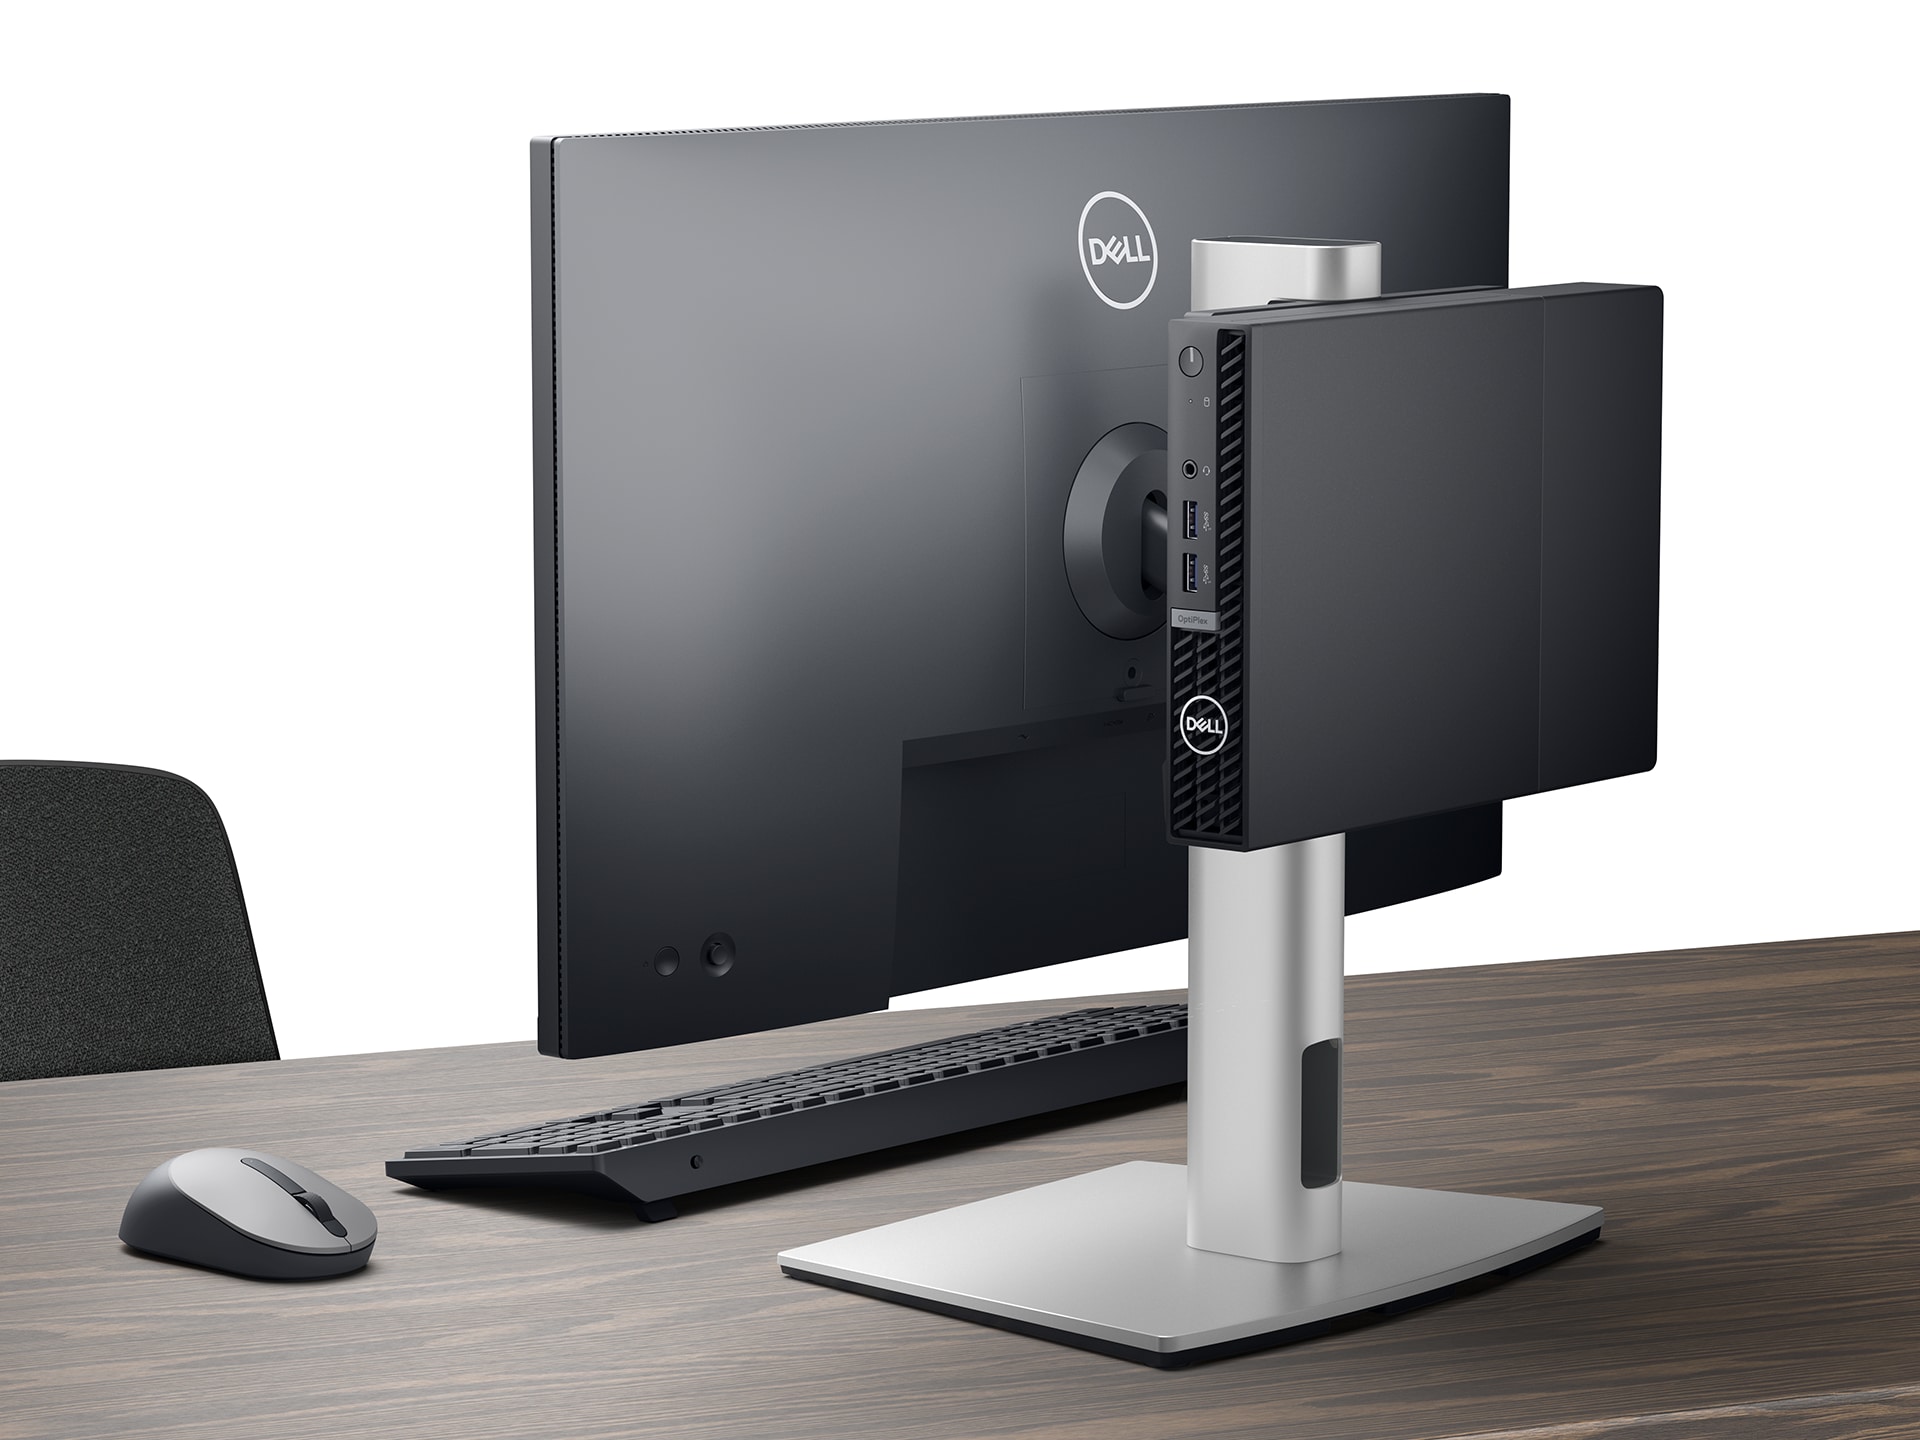 Optiplex 7000 Series MFF Plus Model 7010 Desktop, MSF22 Stand, P2723DE Monitor, KM5521W 